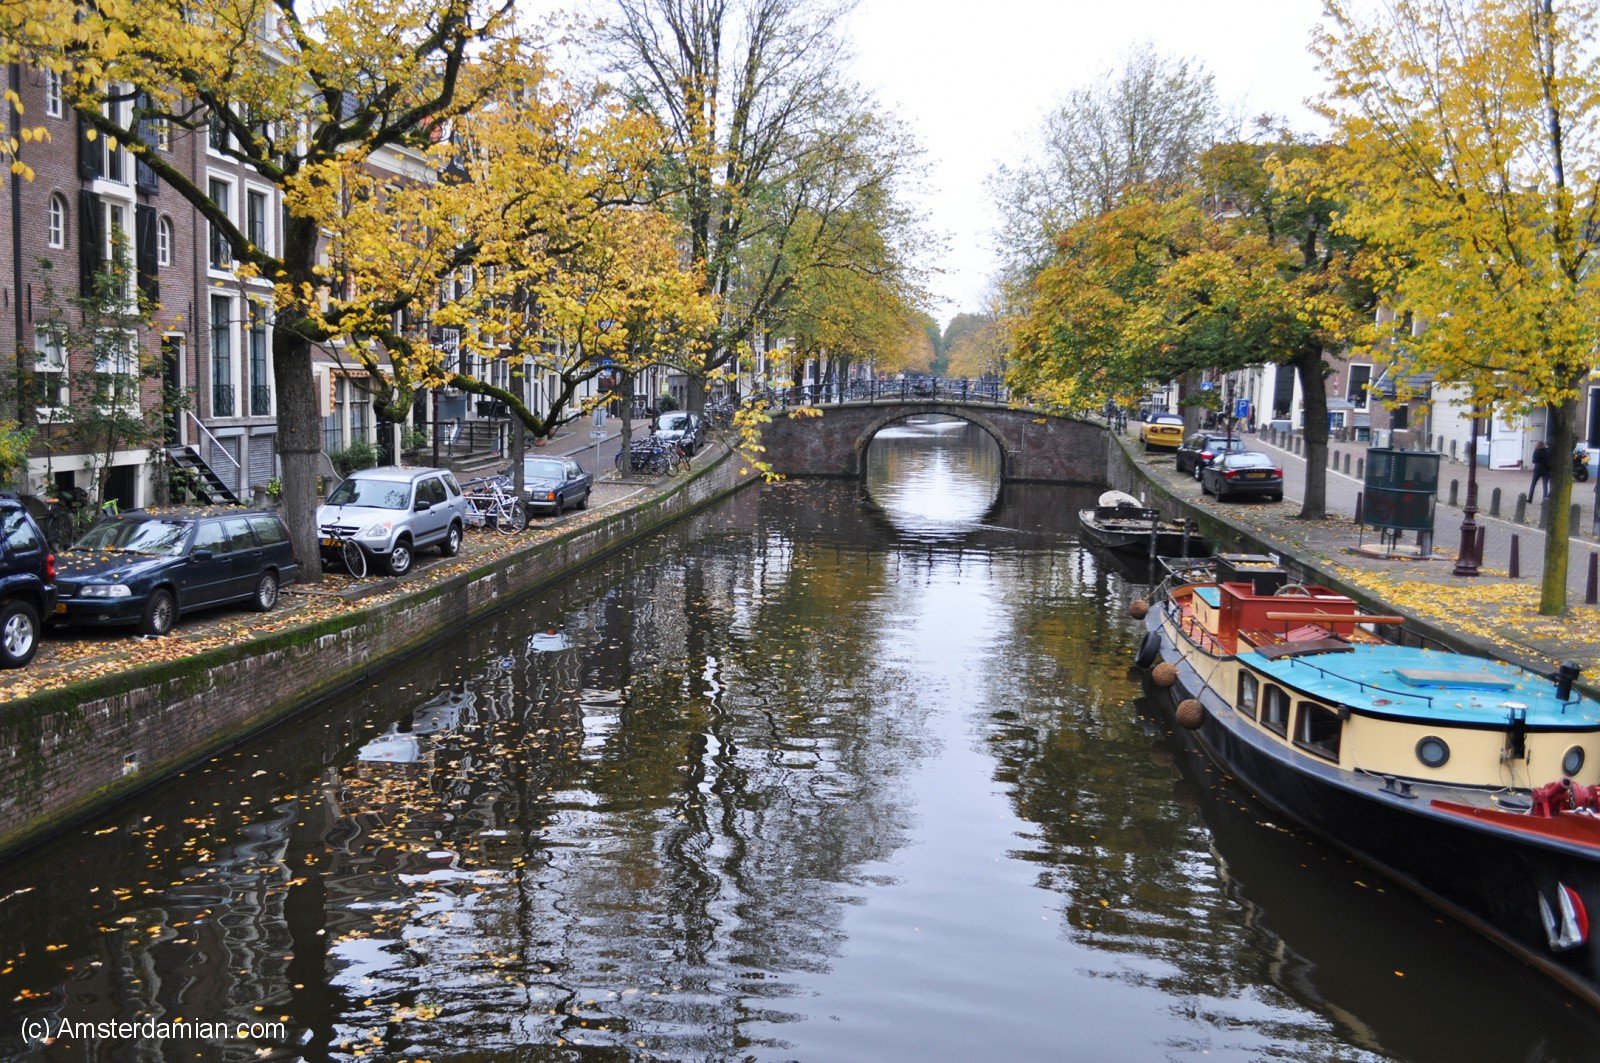 The magic of autumn | Amsterdamian - Amsterdam Blog